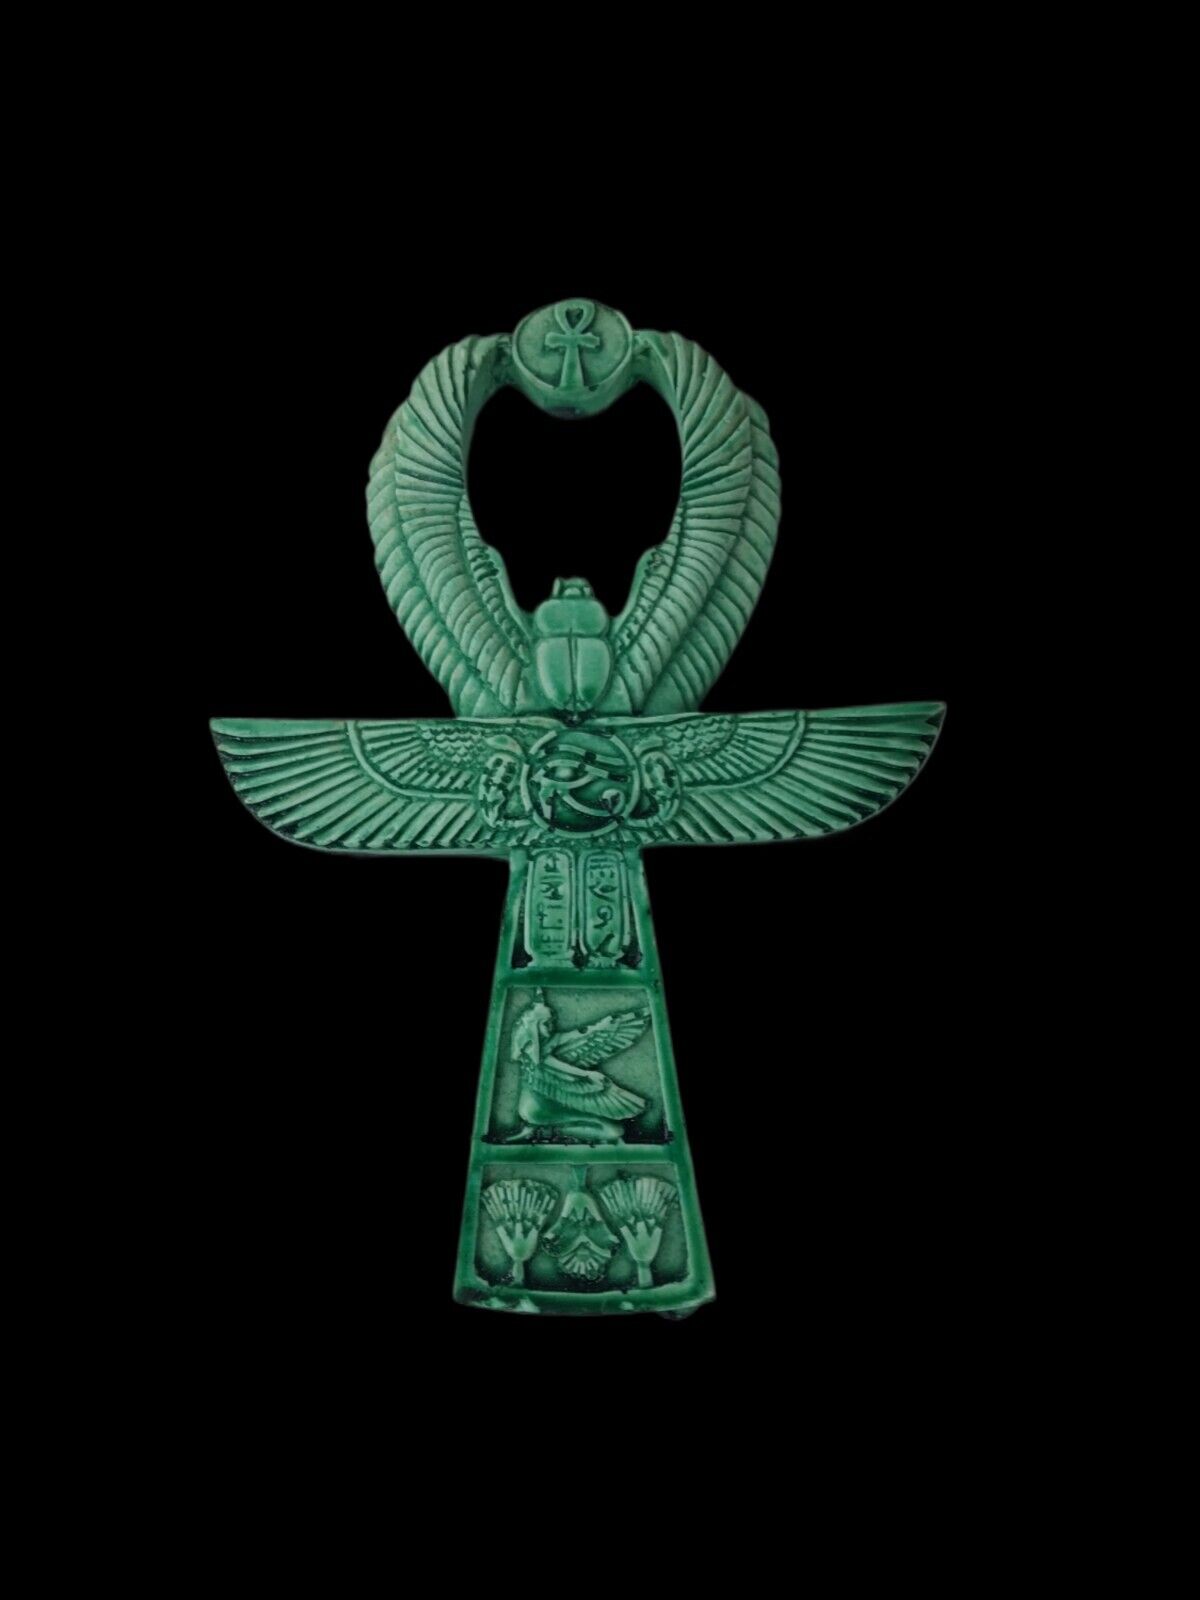 UNIQUE ANTIQUE ANCIENT EGYPTIAN Ankh Key of Life Symbol Eye of Horus Hand made